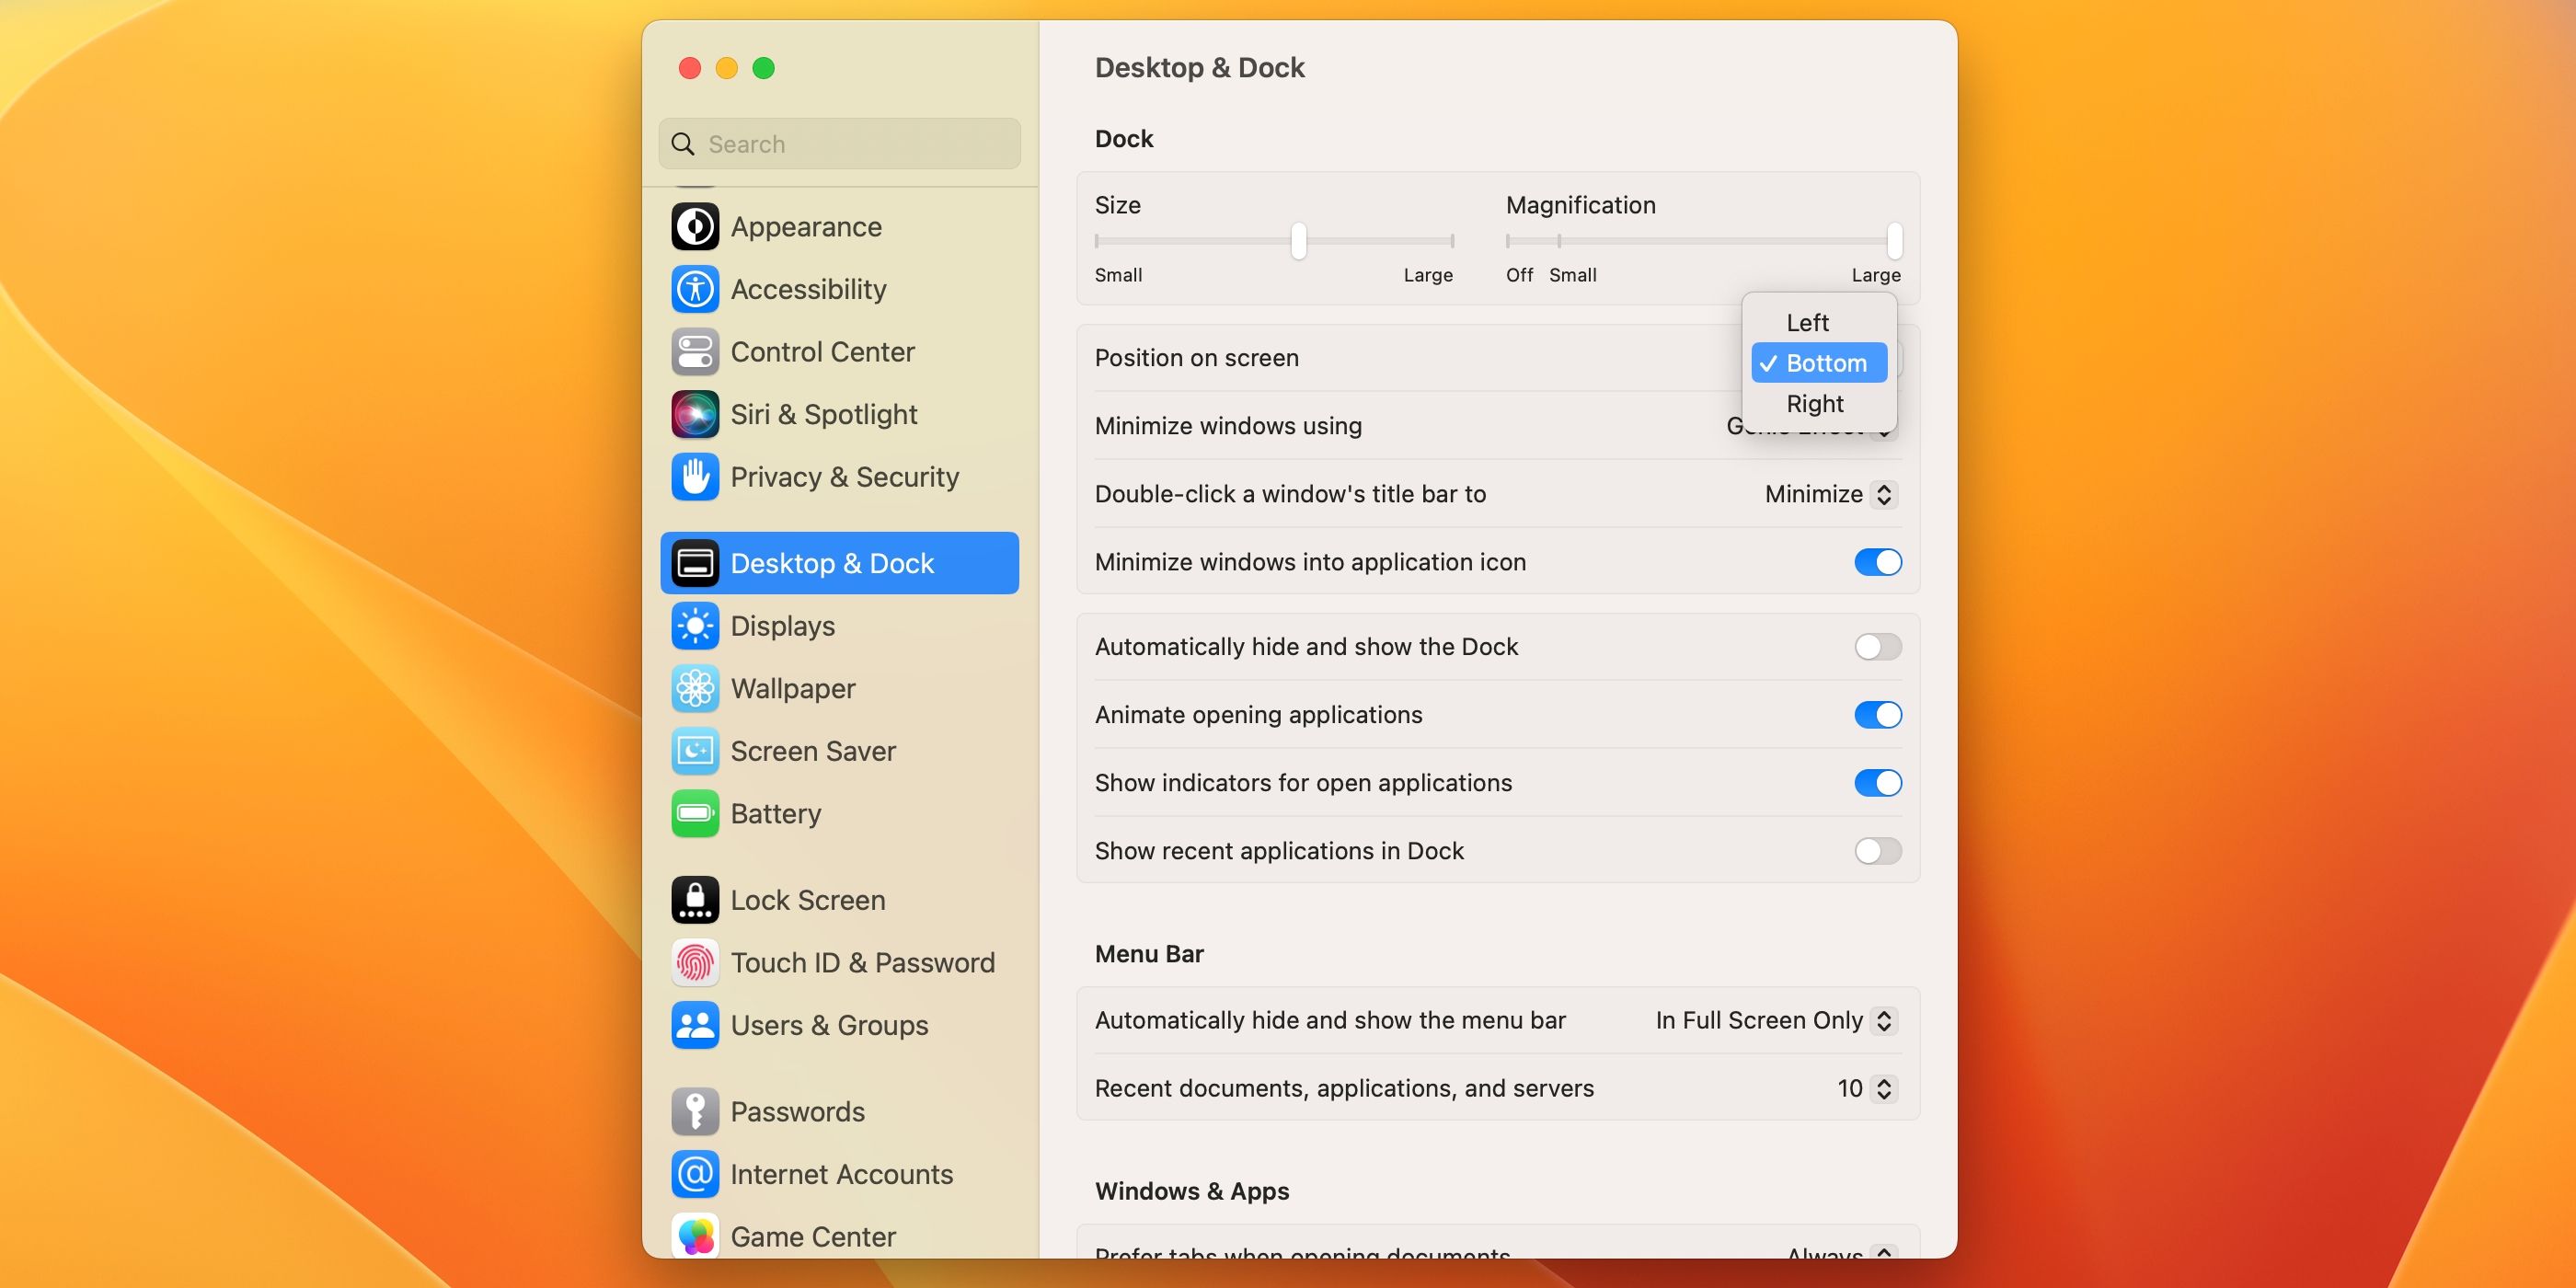 Dock settings in the System Settings app on macOS Ventura